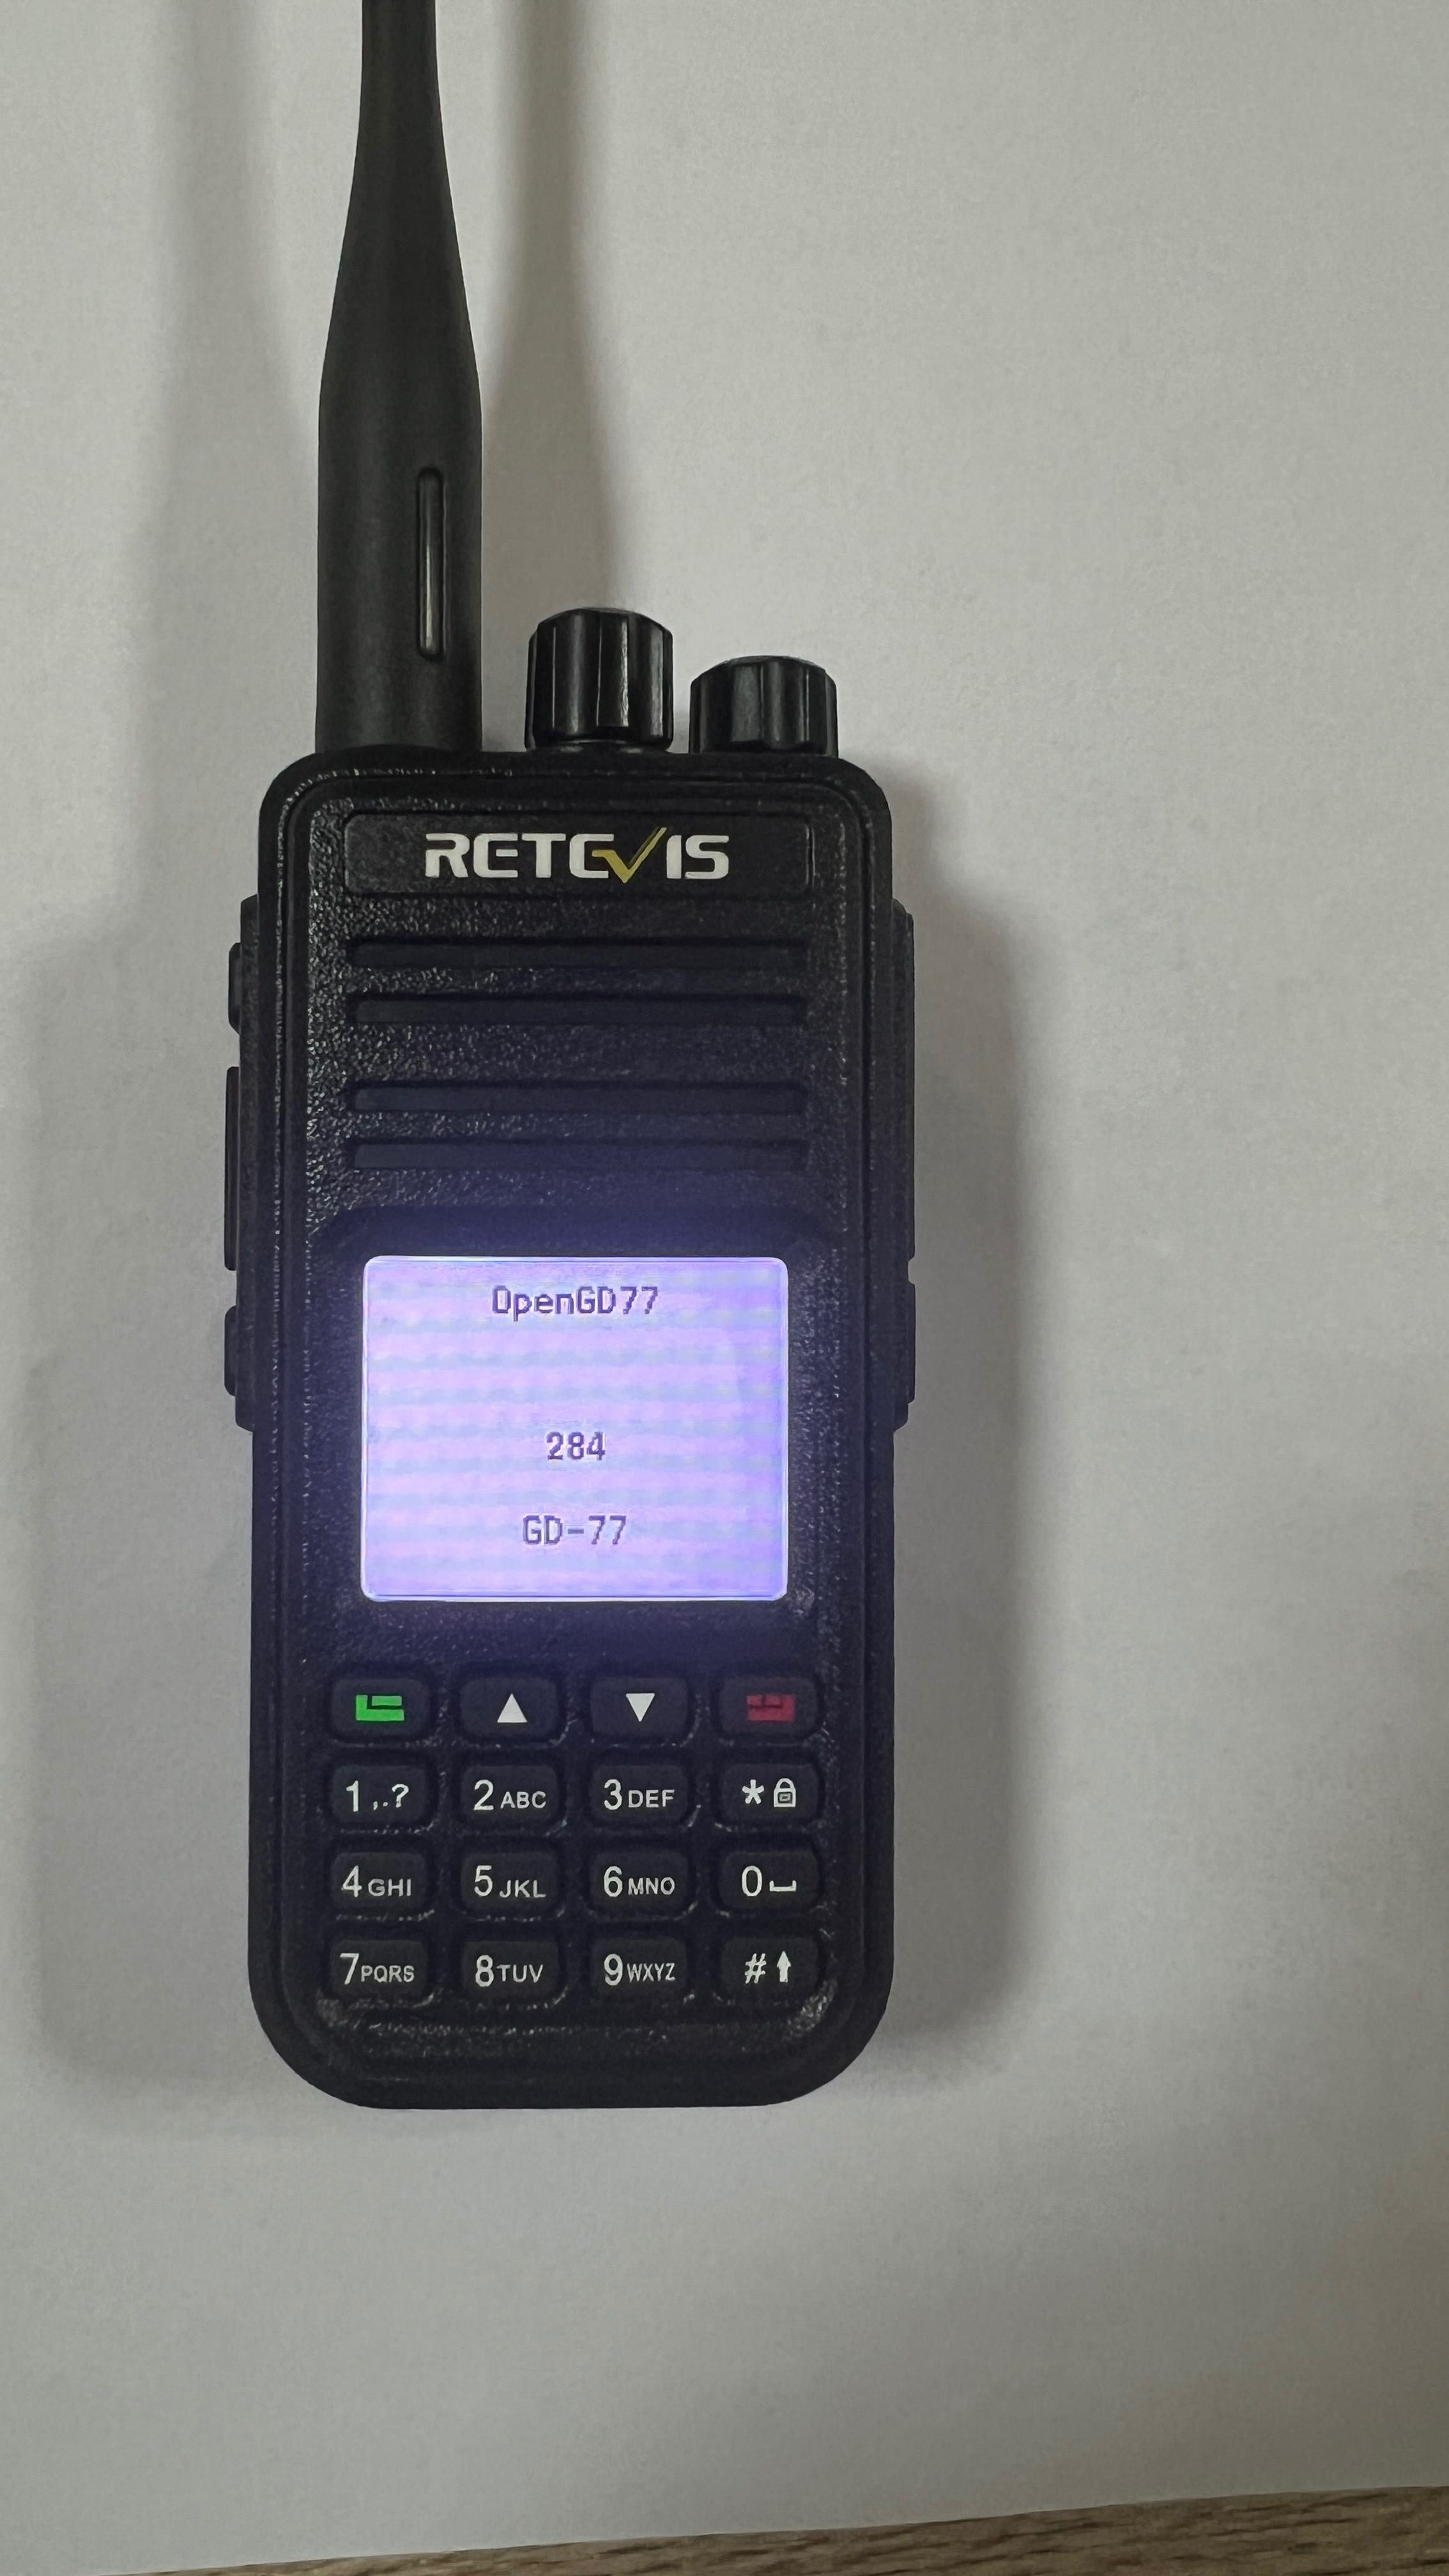 Retevis RT3s дигитална радиостанция